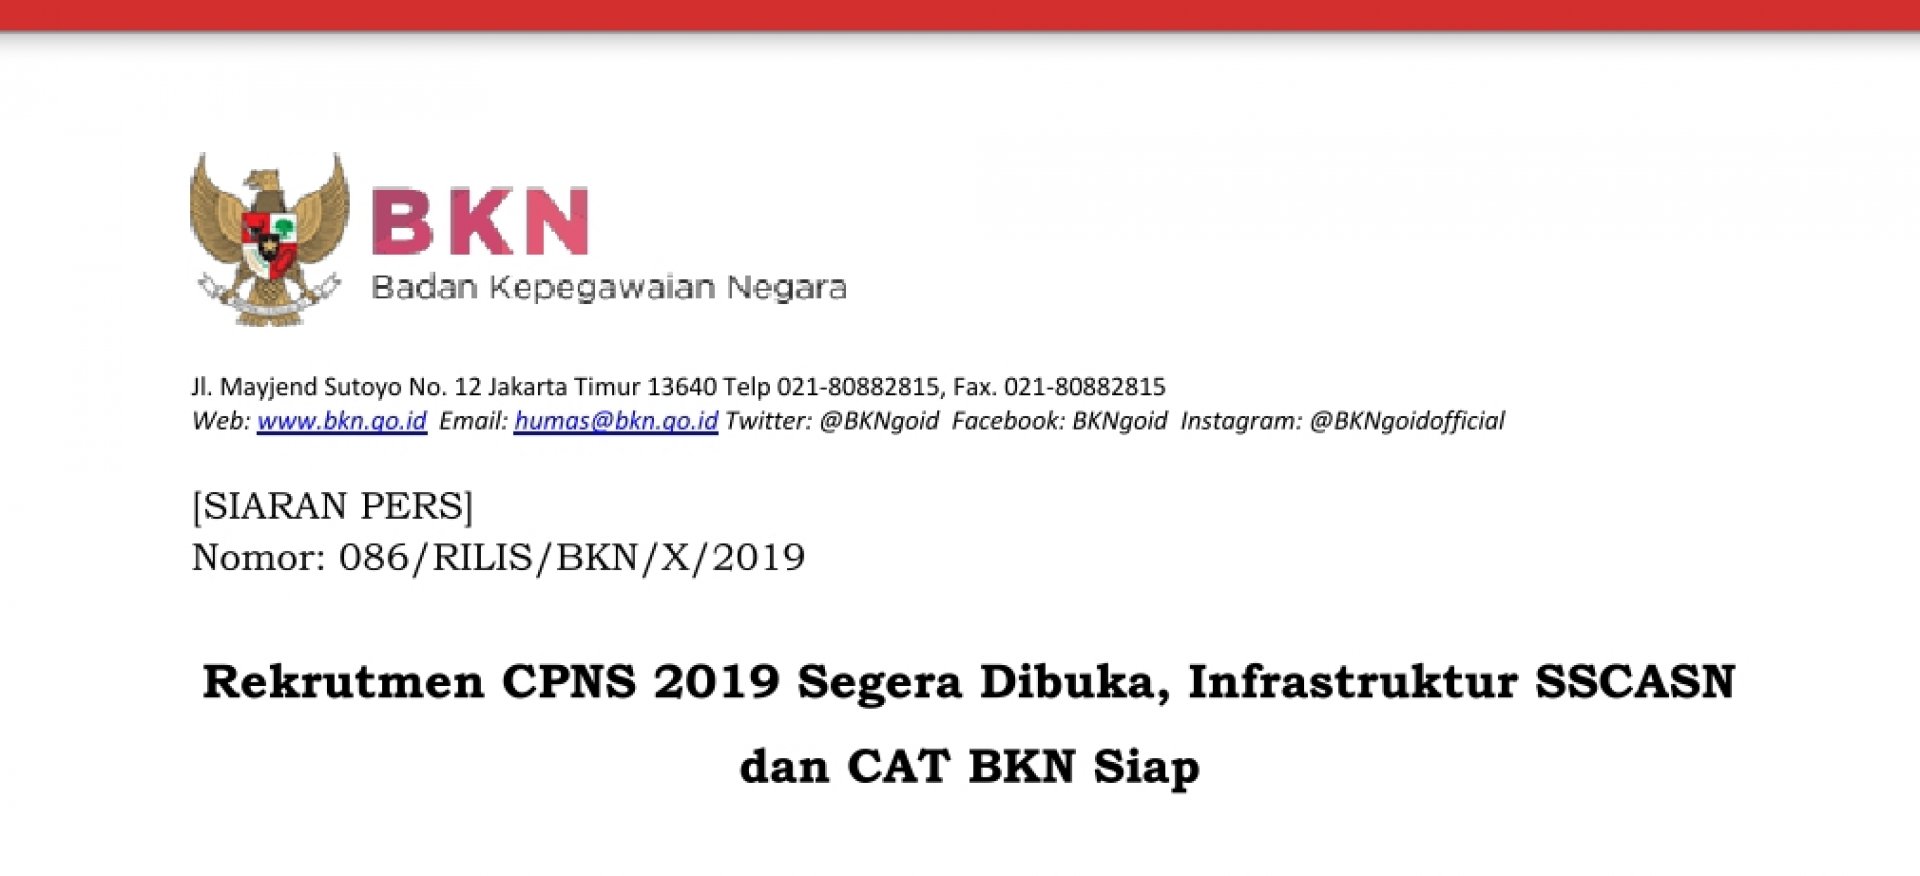 SIARAN PERS BKN Nomor: 086/RILIS/BKN/X/2019 tentang Rekrutmen CPNS 2019 Segera Dibuka, Infrastruktur SSCASN dan CAT BKN Siap